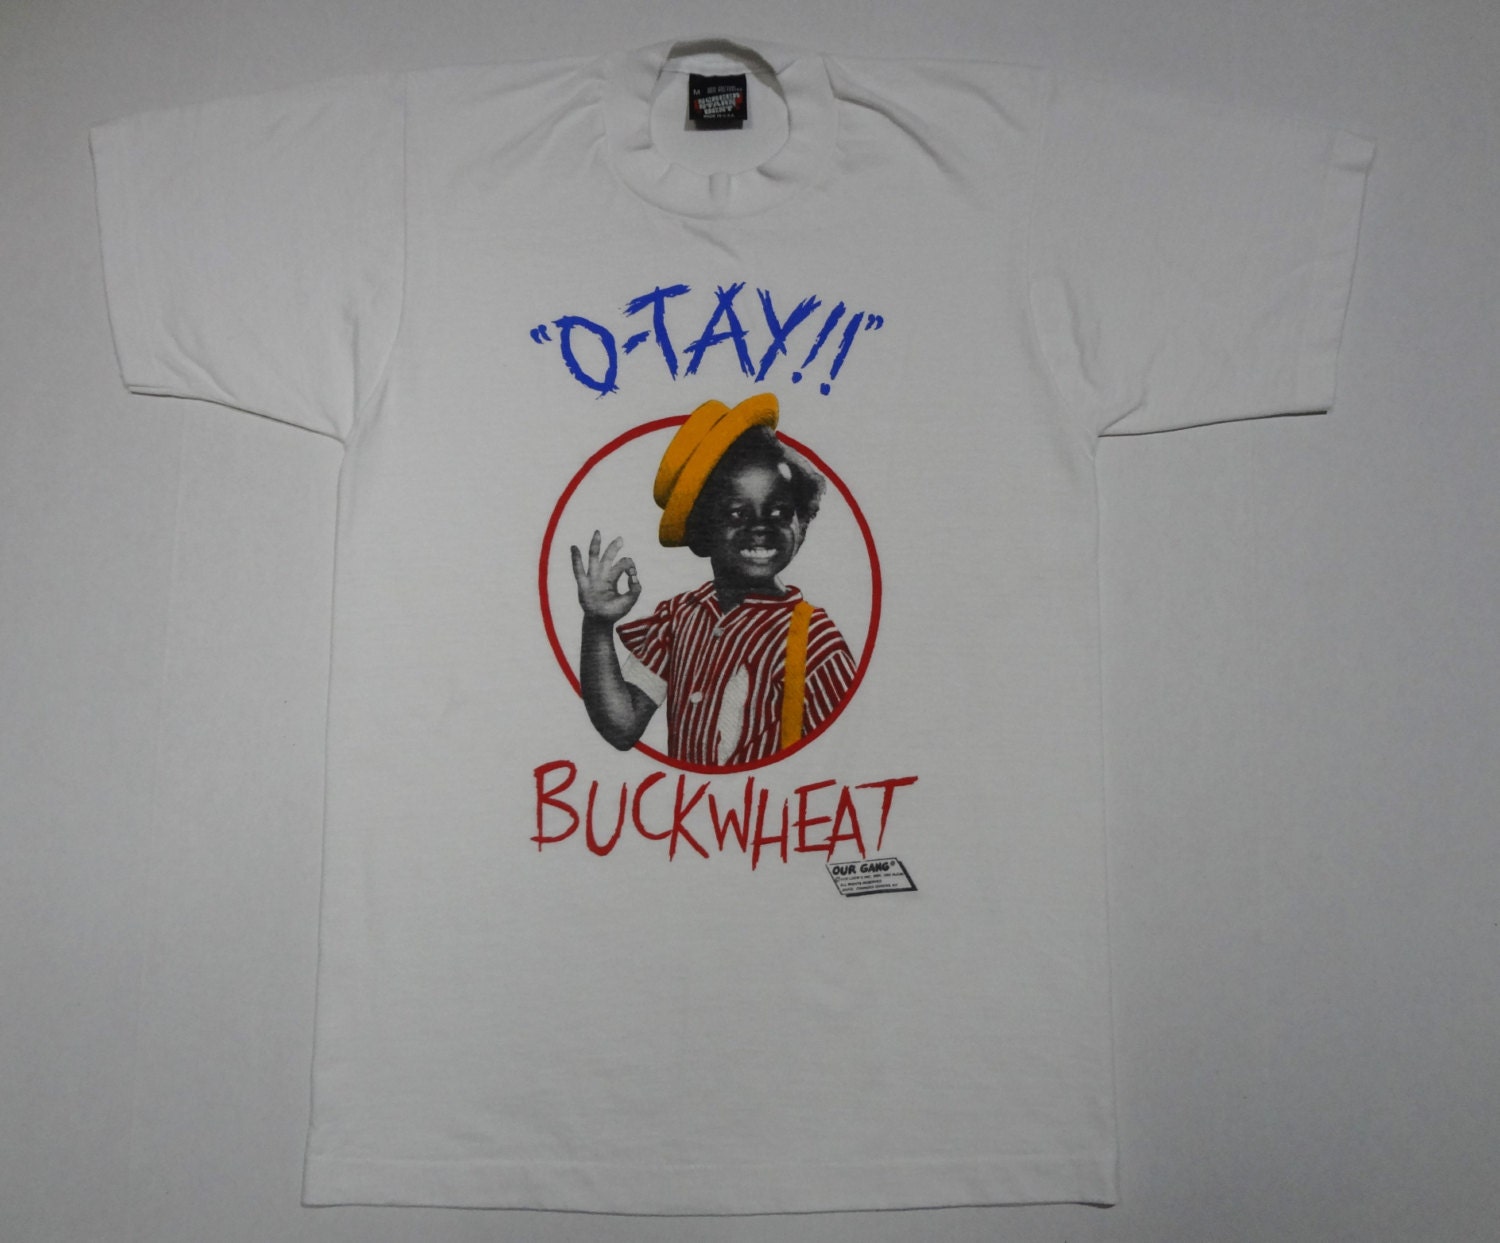 Buckwheat O-Tay T-Shirt Vintage 1980s M The